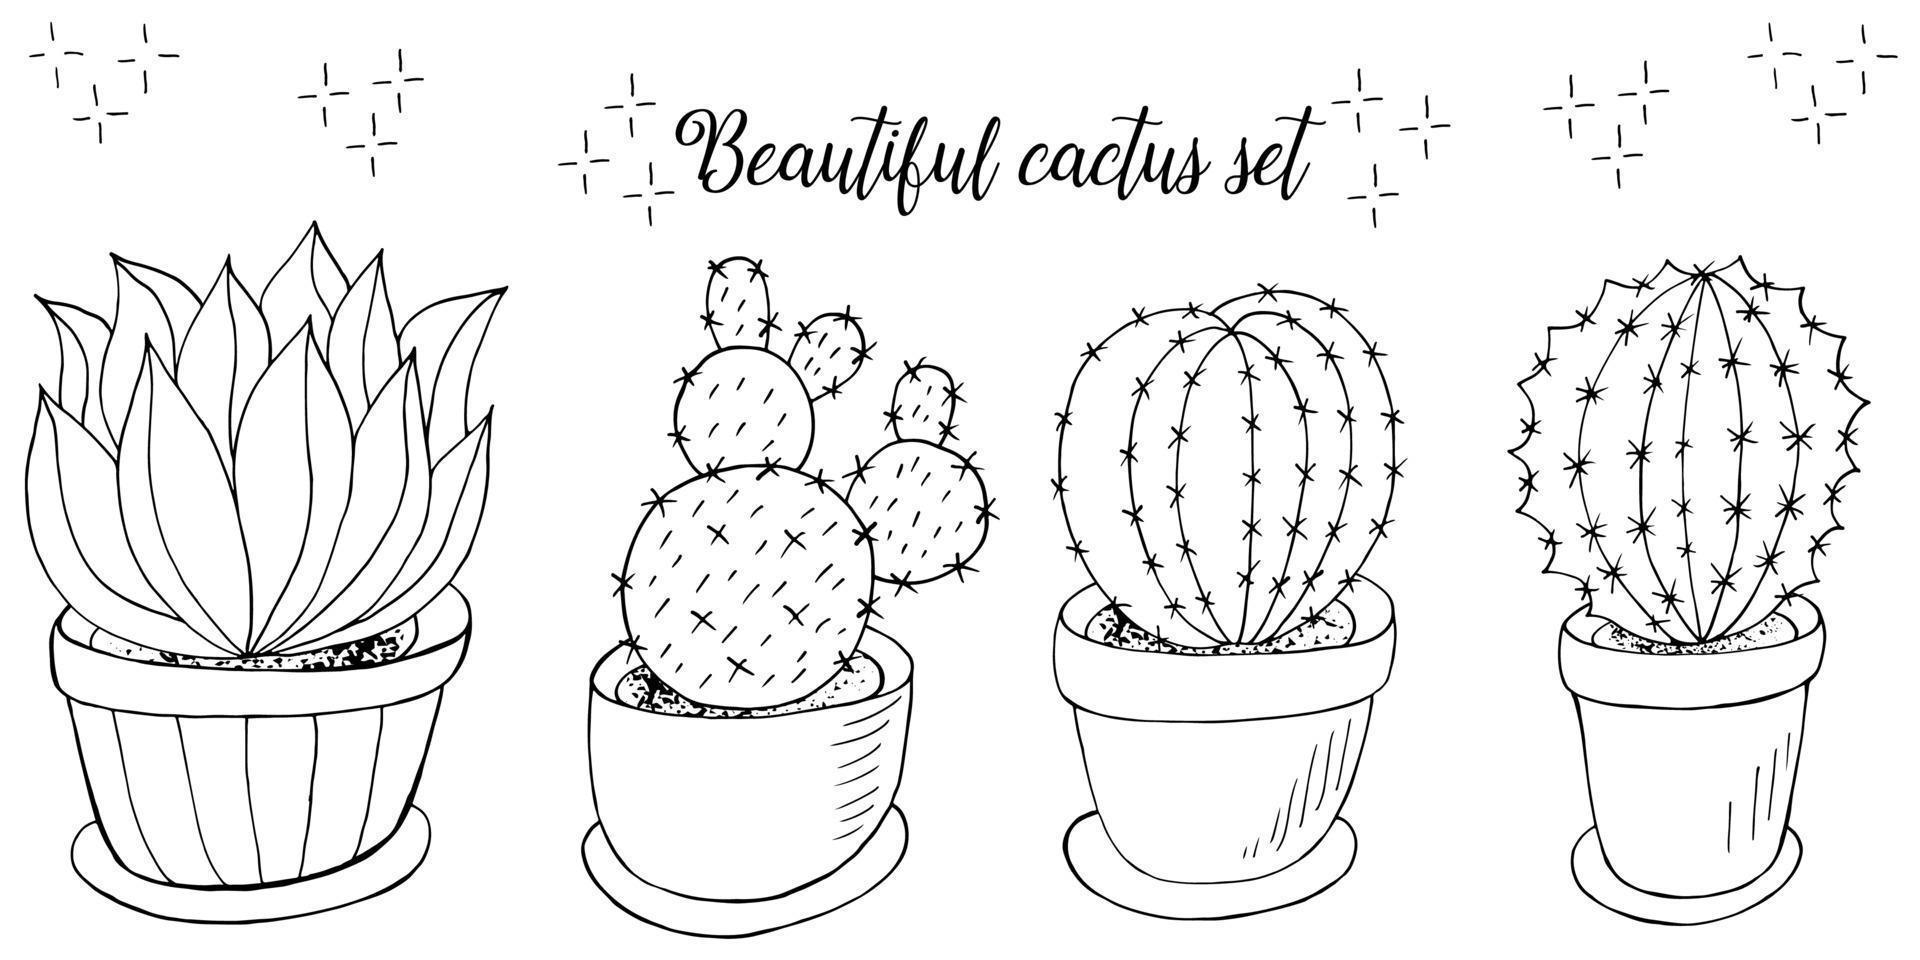 Coloring illustration. Cacti, aloe, succulents. Decorative natural elements vector